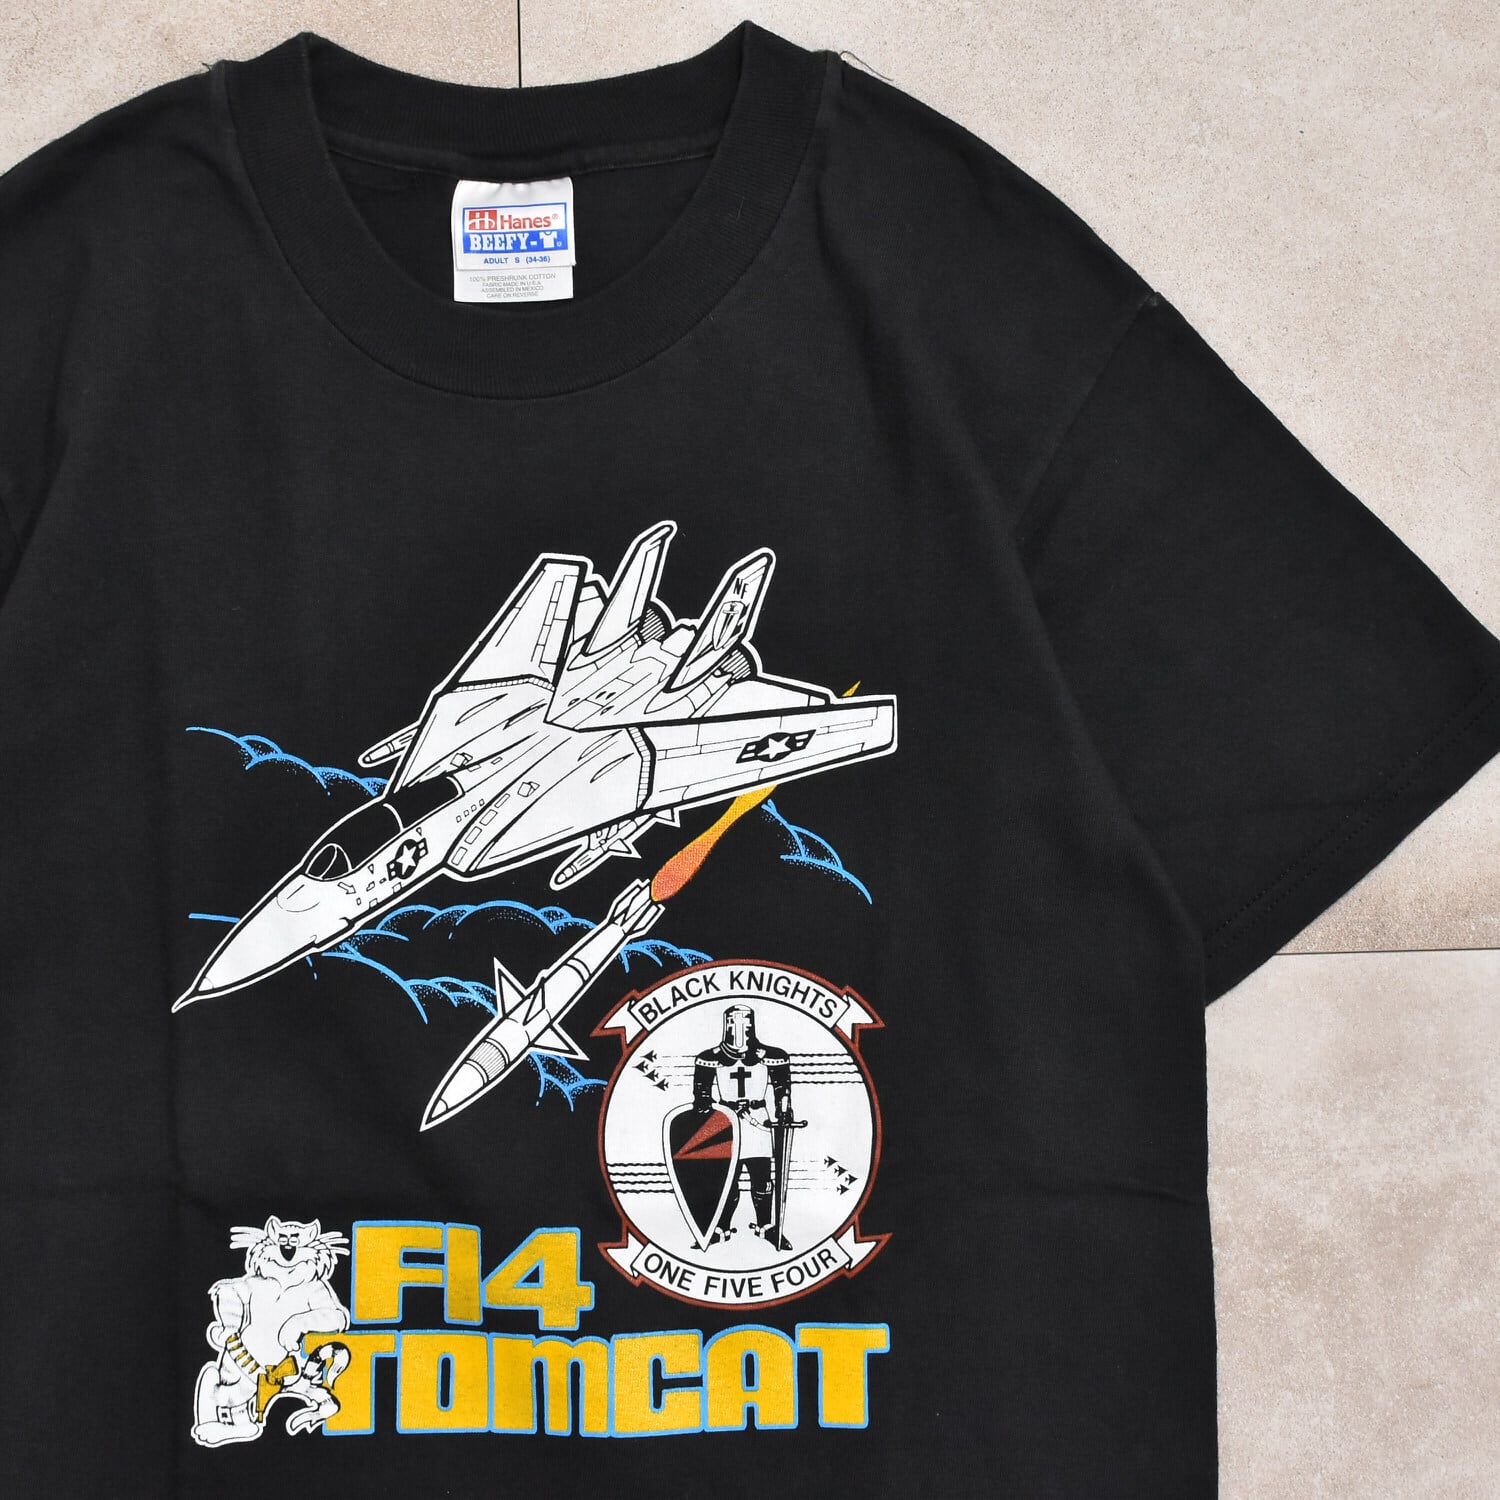 90s～ USA Hanes F14 TOMCAT T-shirt